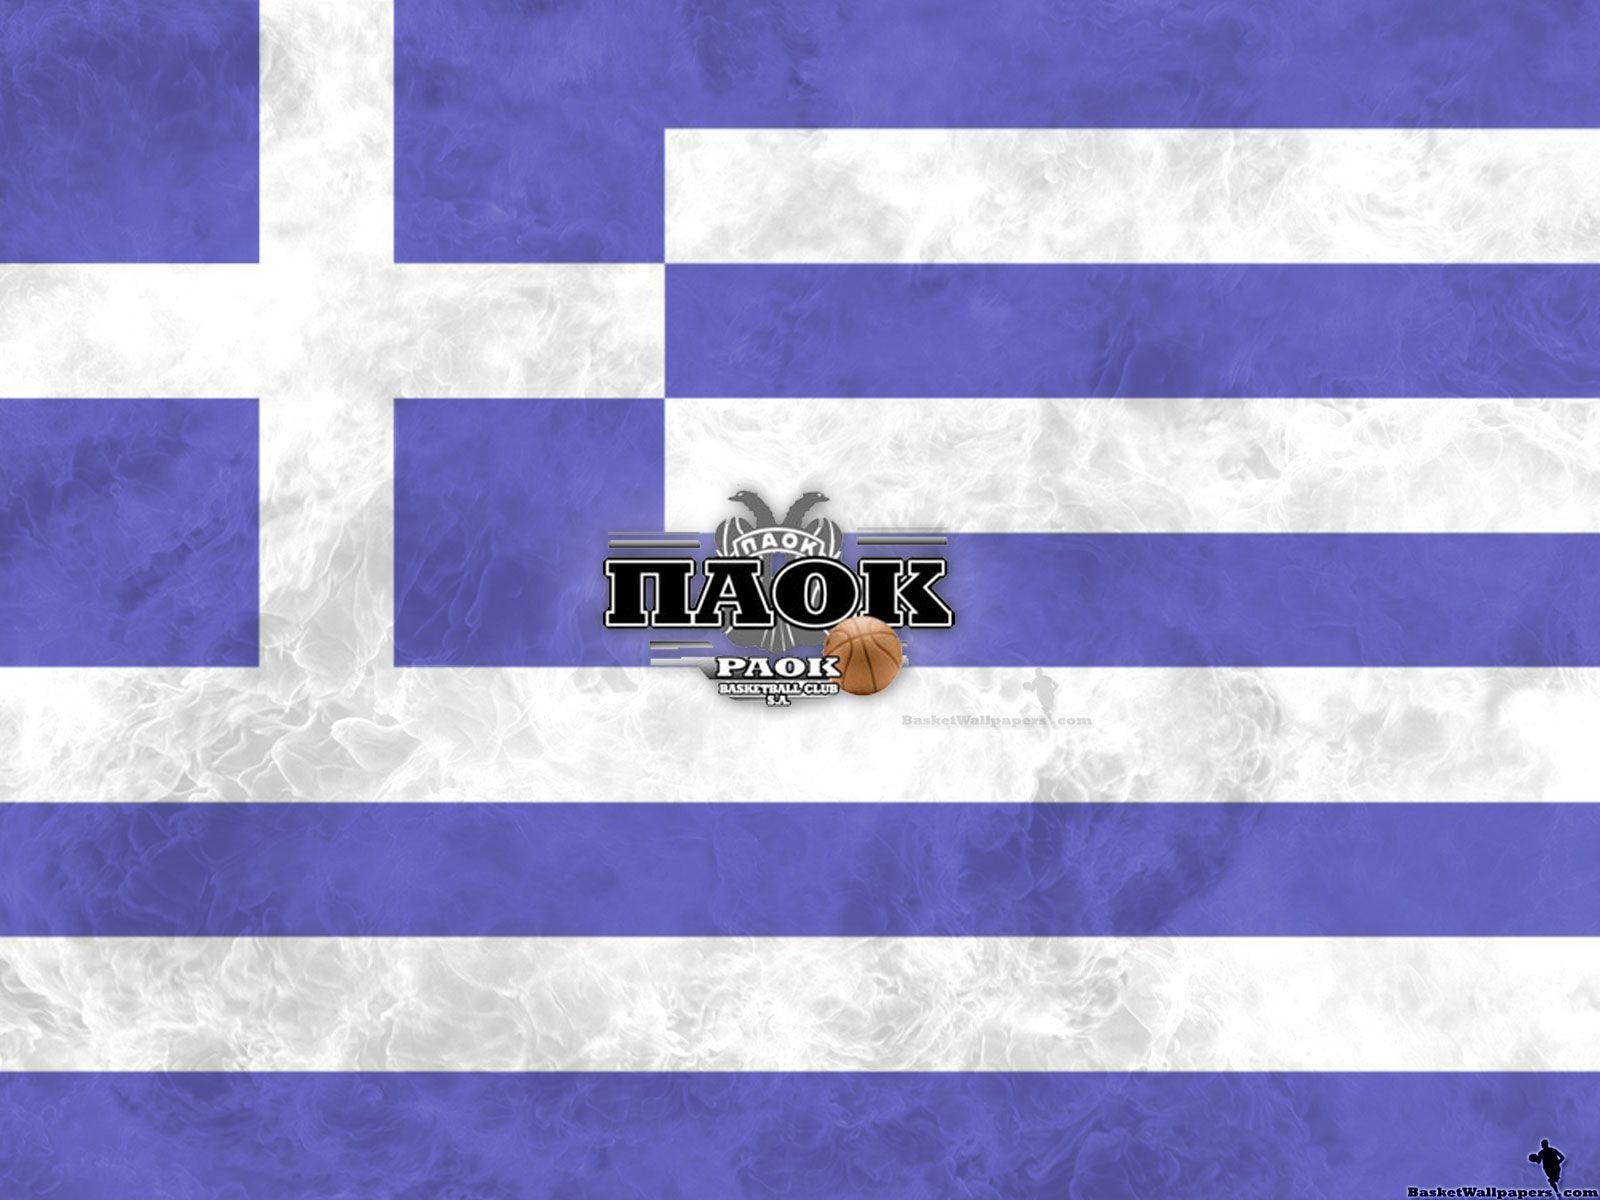 PAOK Thessaloniki BC Wallpaper. Basketball Wallpaper at